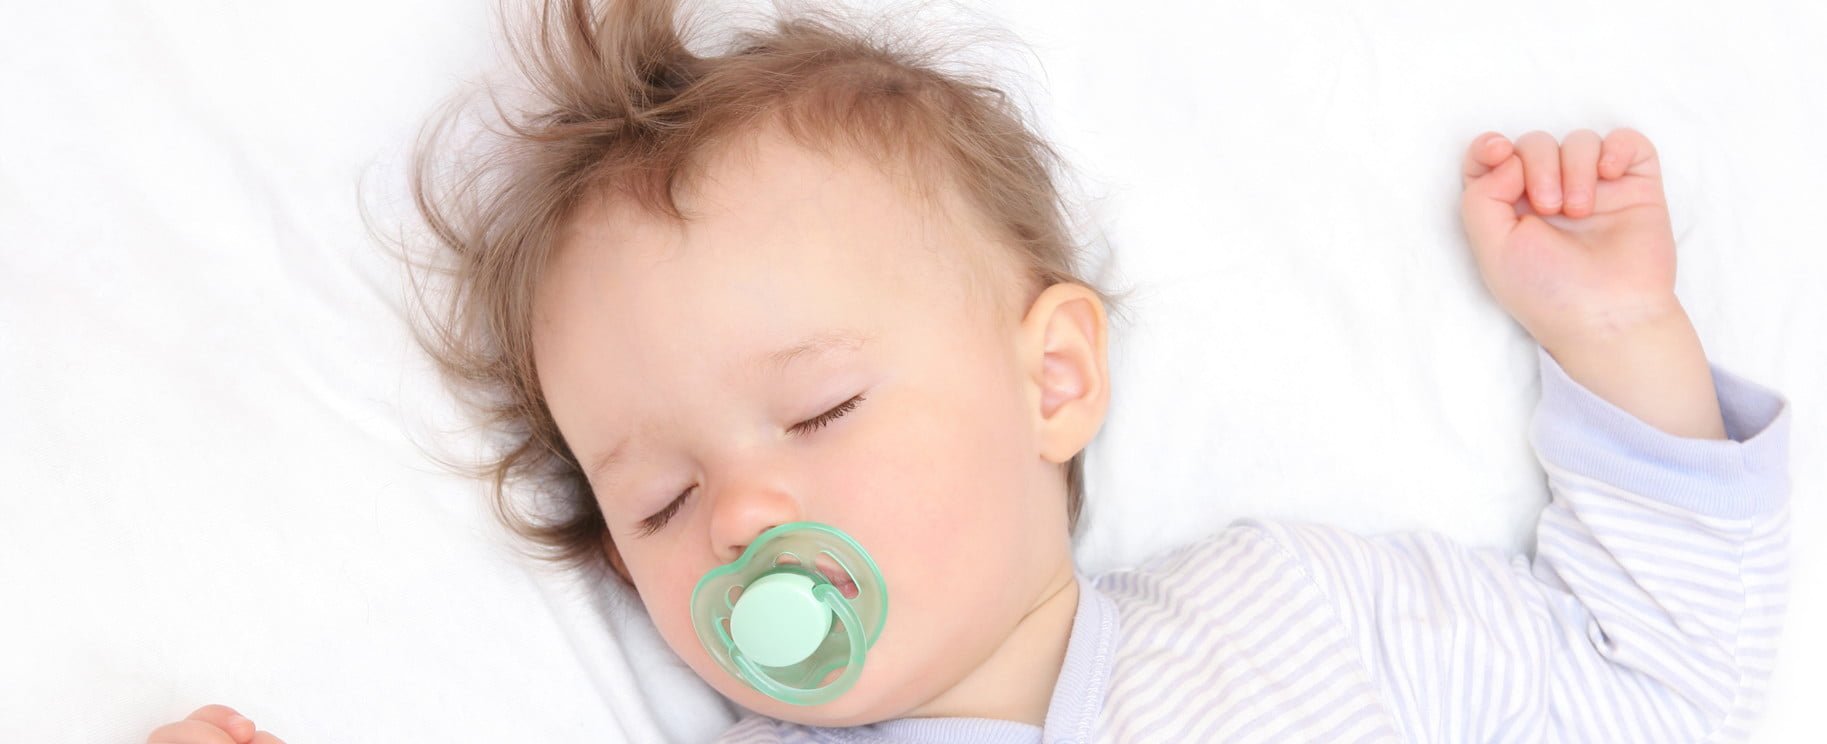 Baby Sleep Tips E1427748715469 مجلة نقطة العلمية